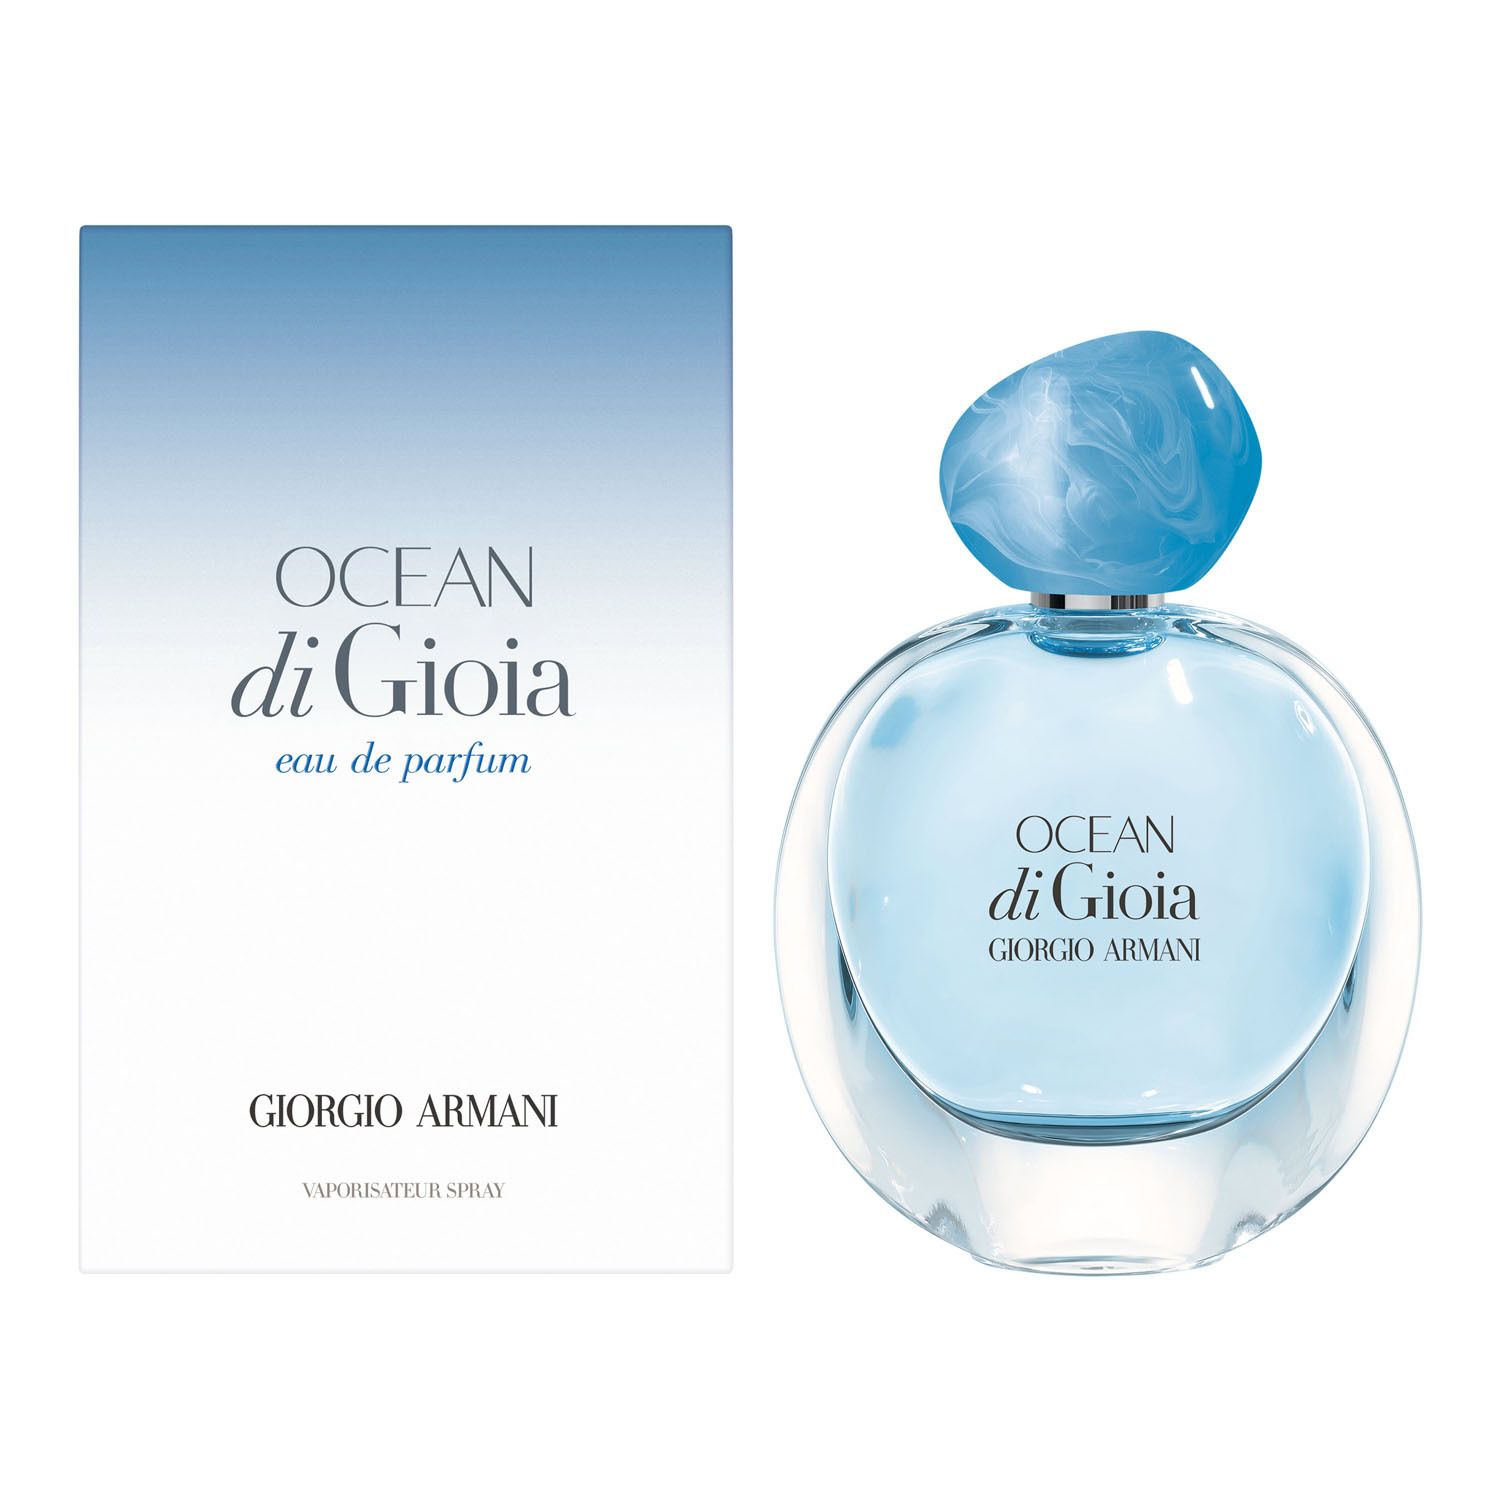 armani exchange parfum